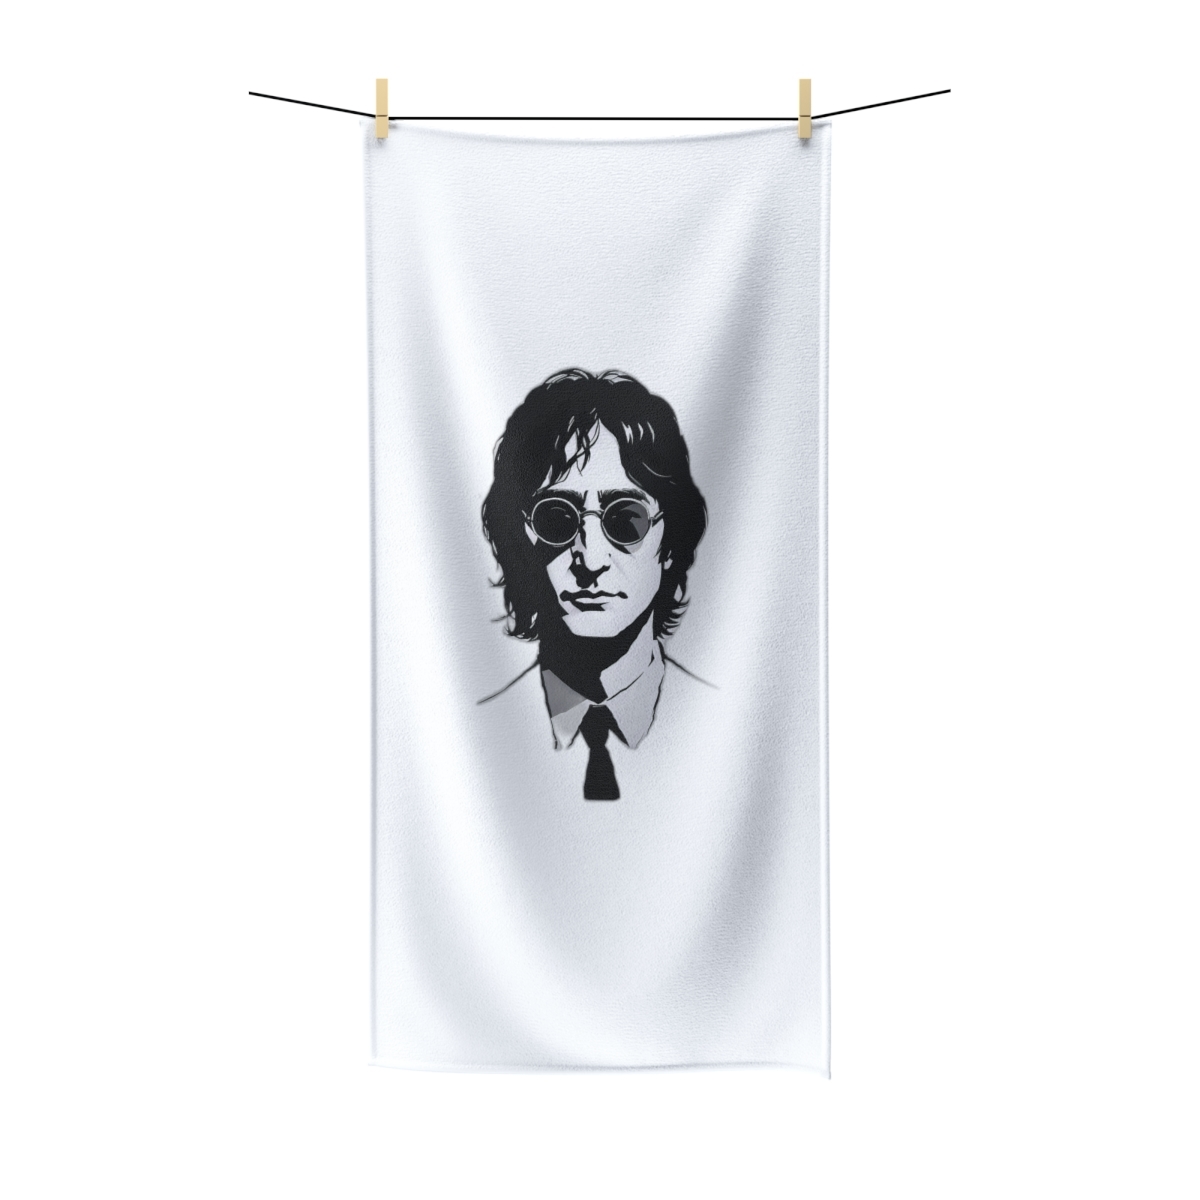 Black and White John Lennon Portrait One-Sided Print Soft Absorbent Bath Towel - $50.47 - $64.89